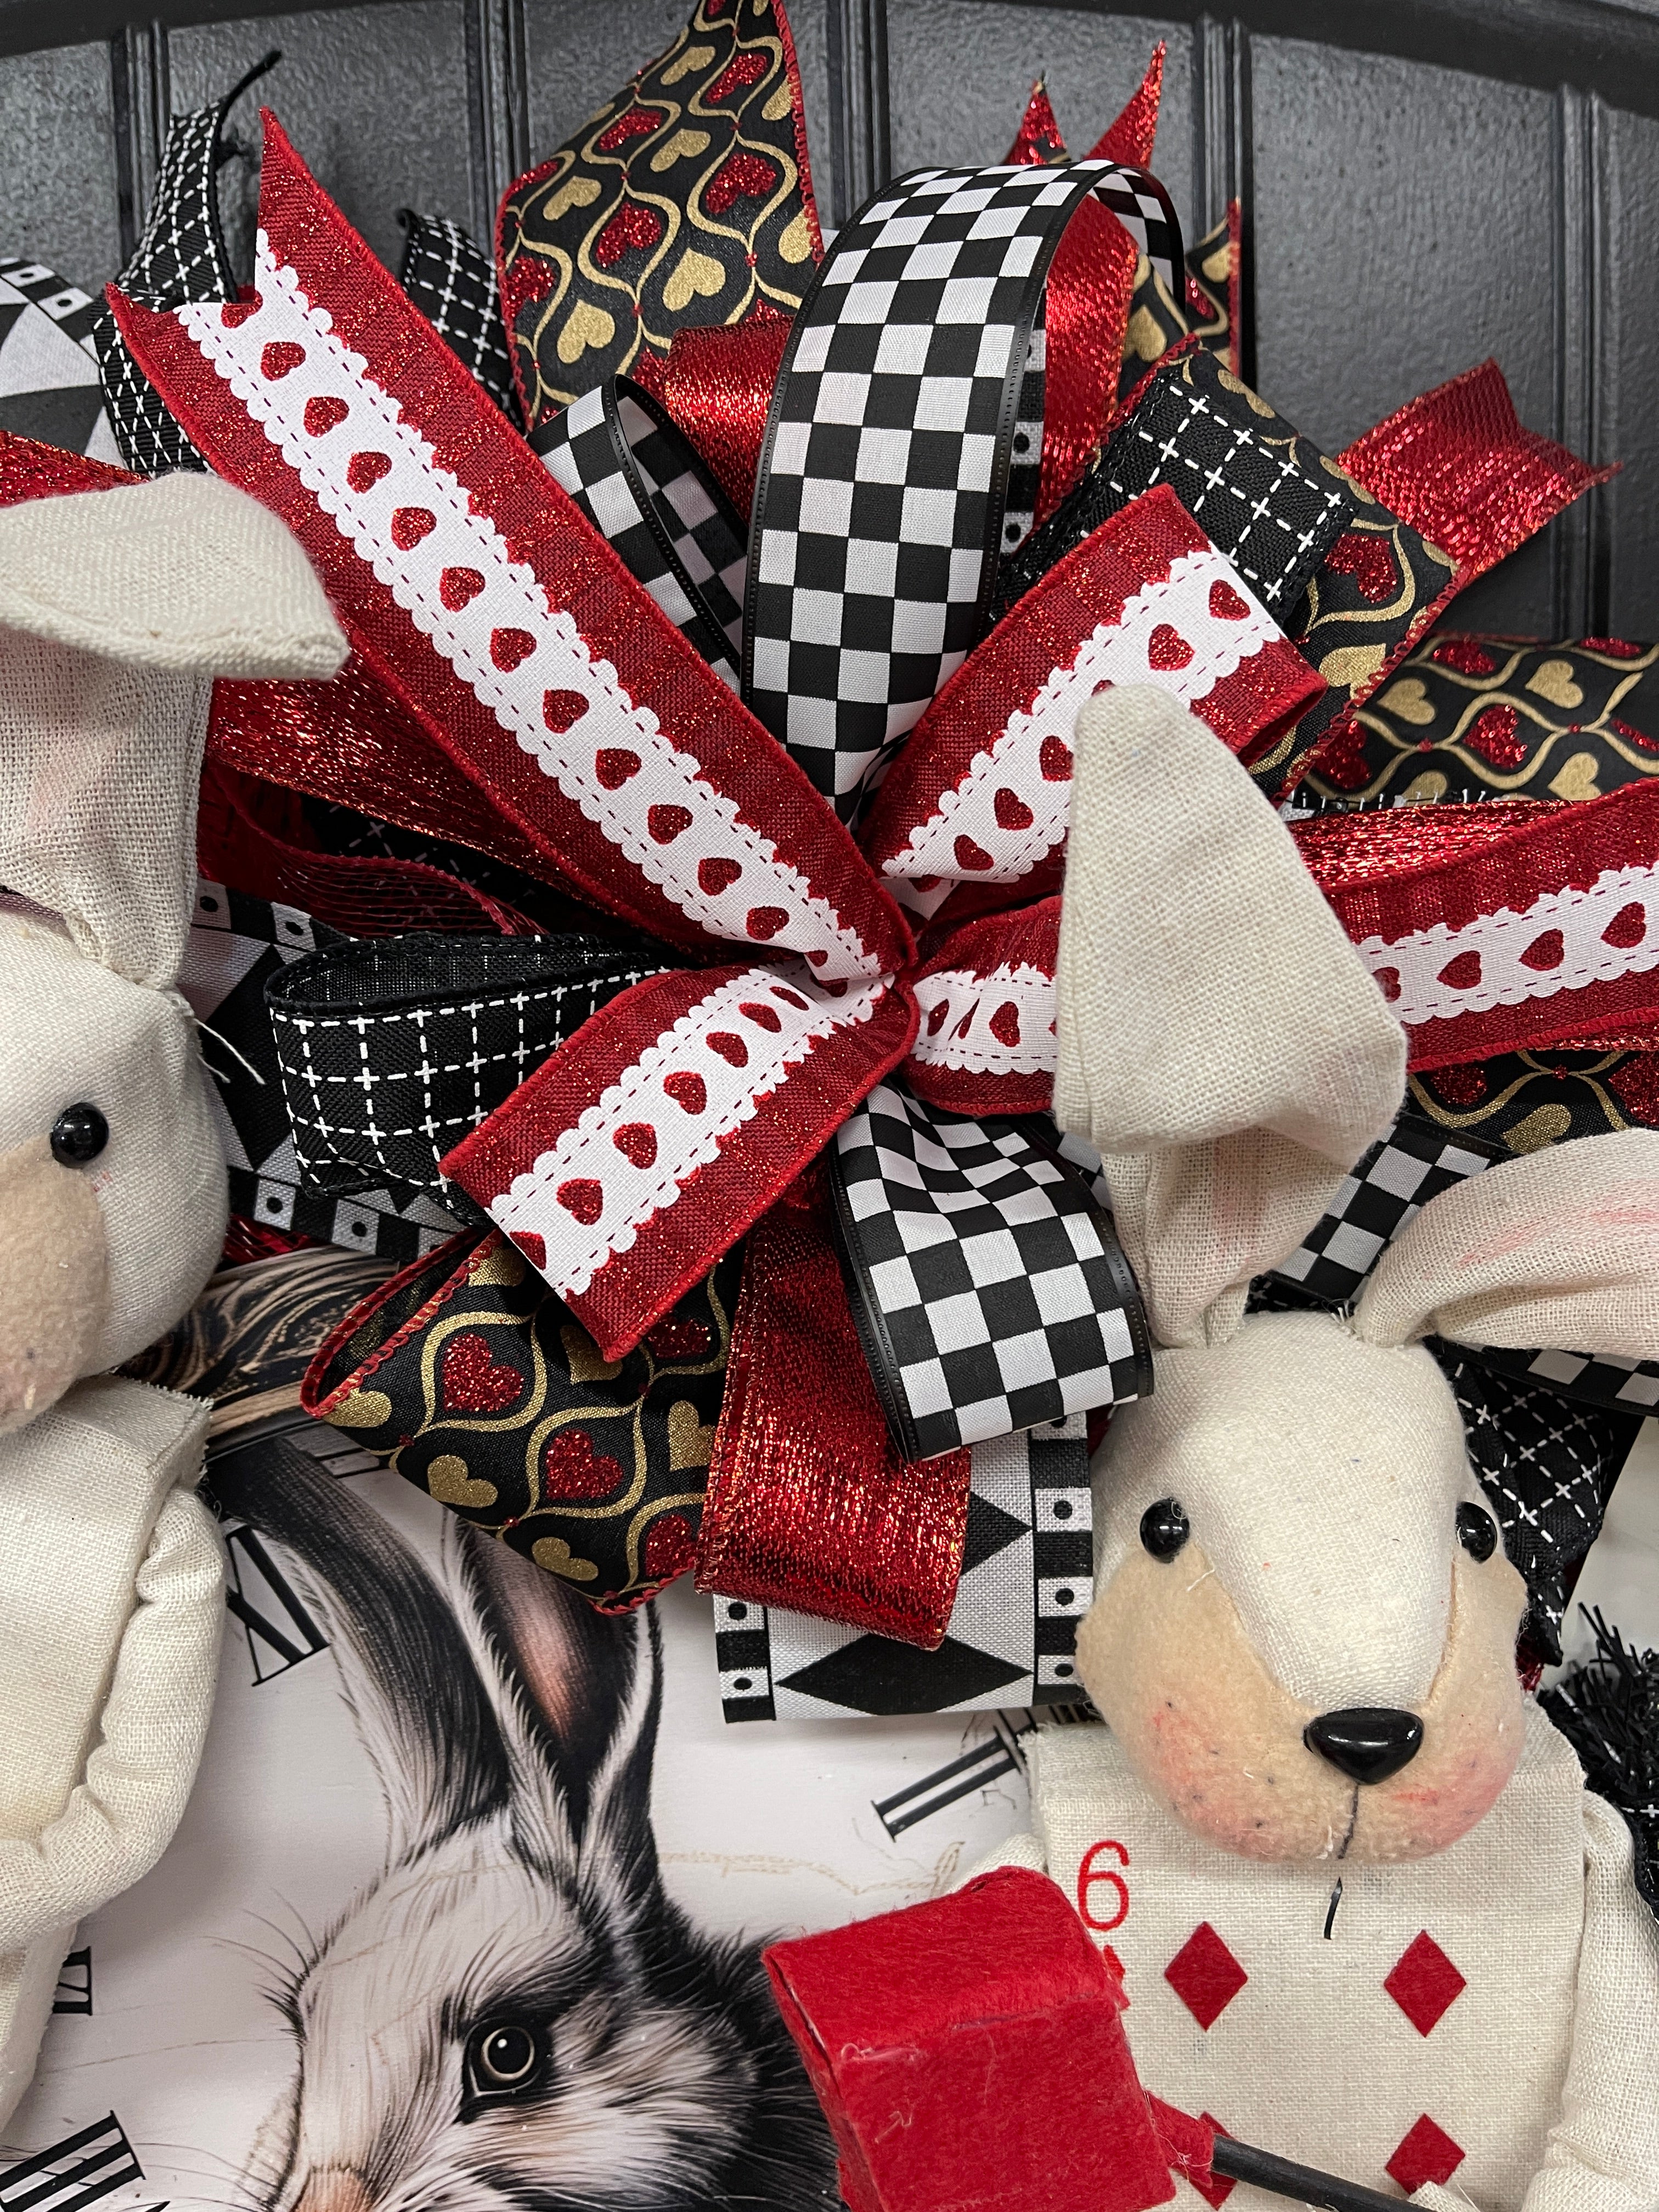 White Rabbits House of Cards Wreath, KatsCreationsNMore